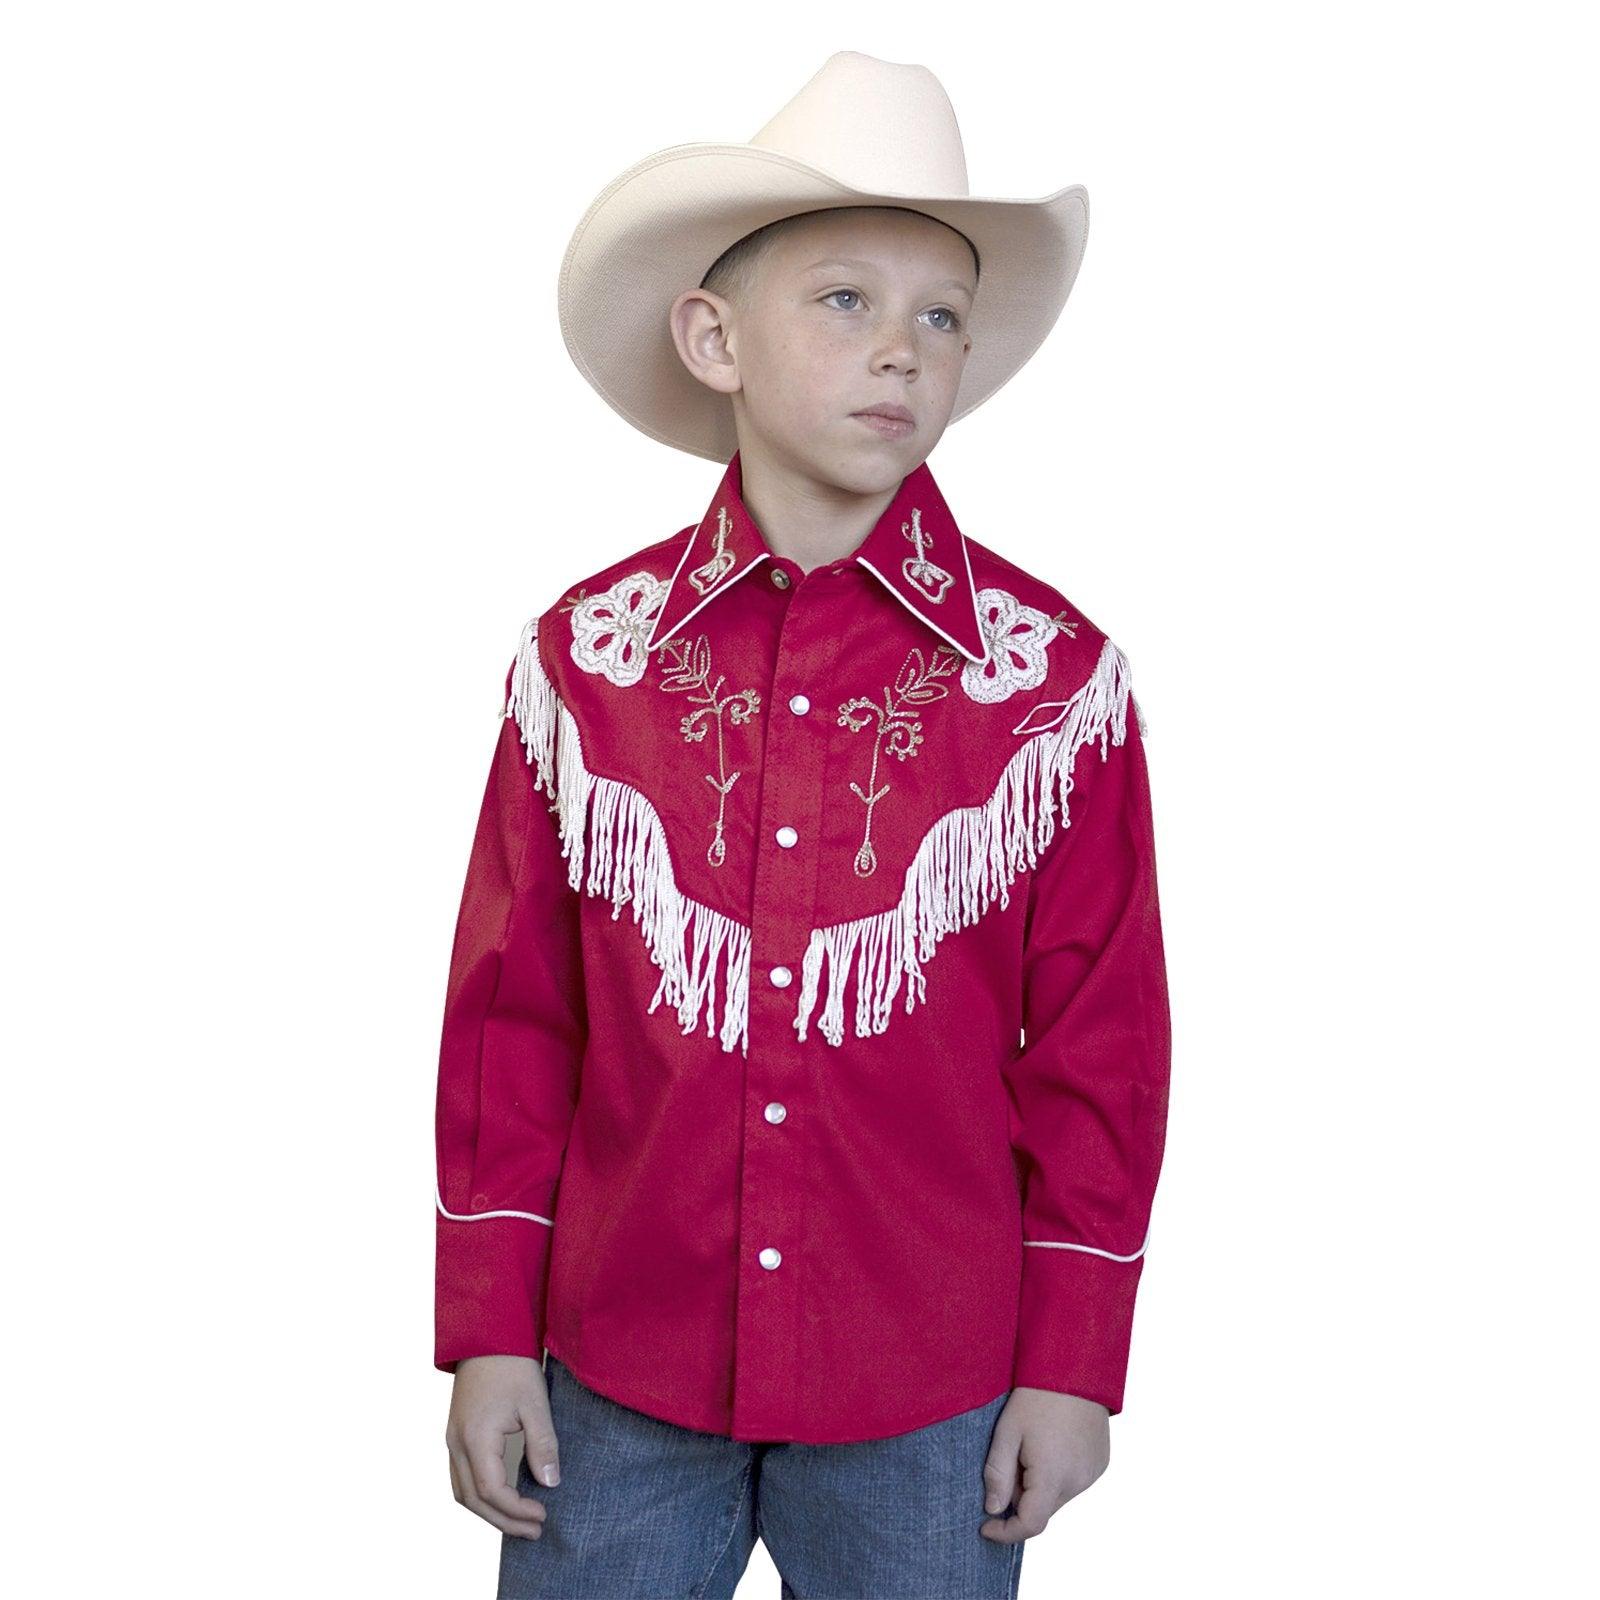 Predators, Lighting embrace Nashville with cowboy attire for